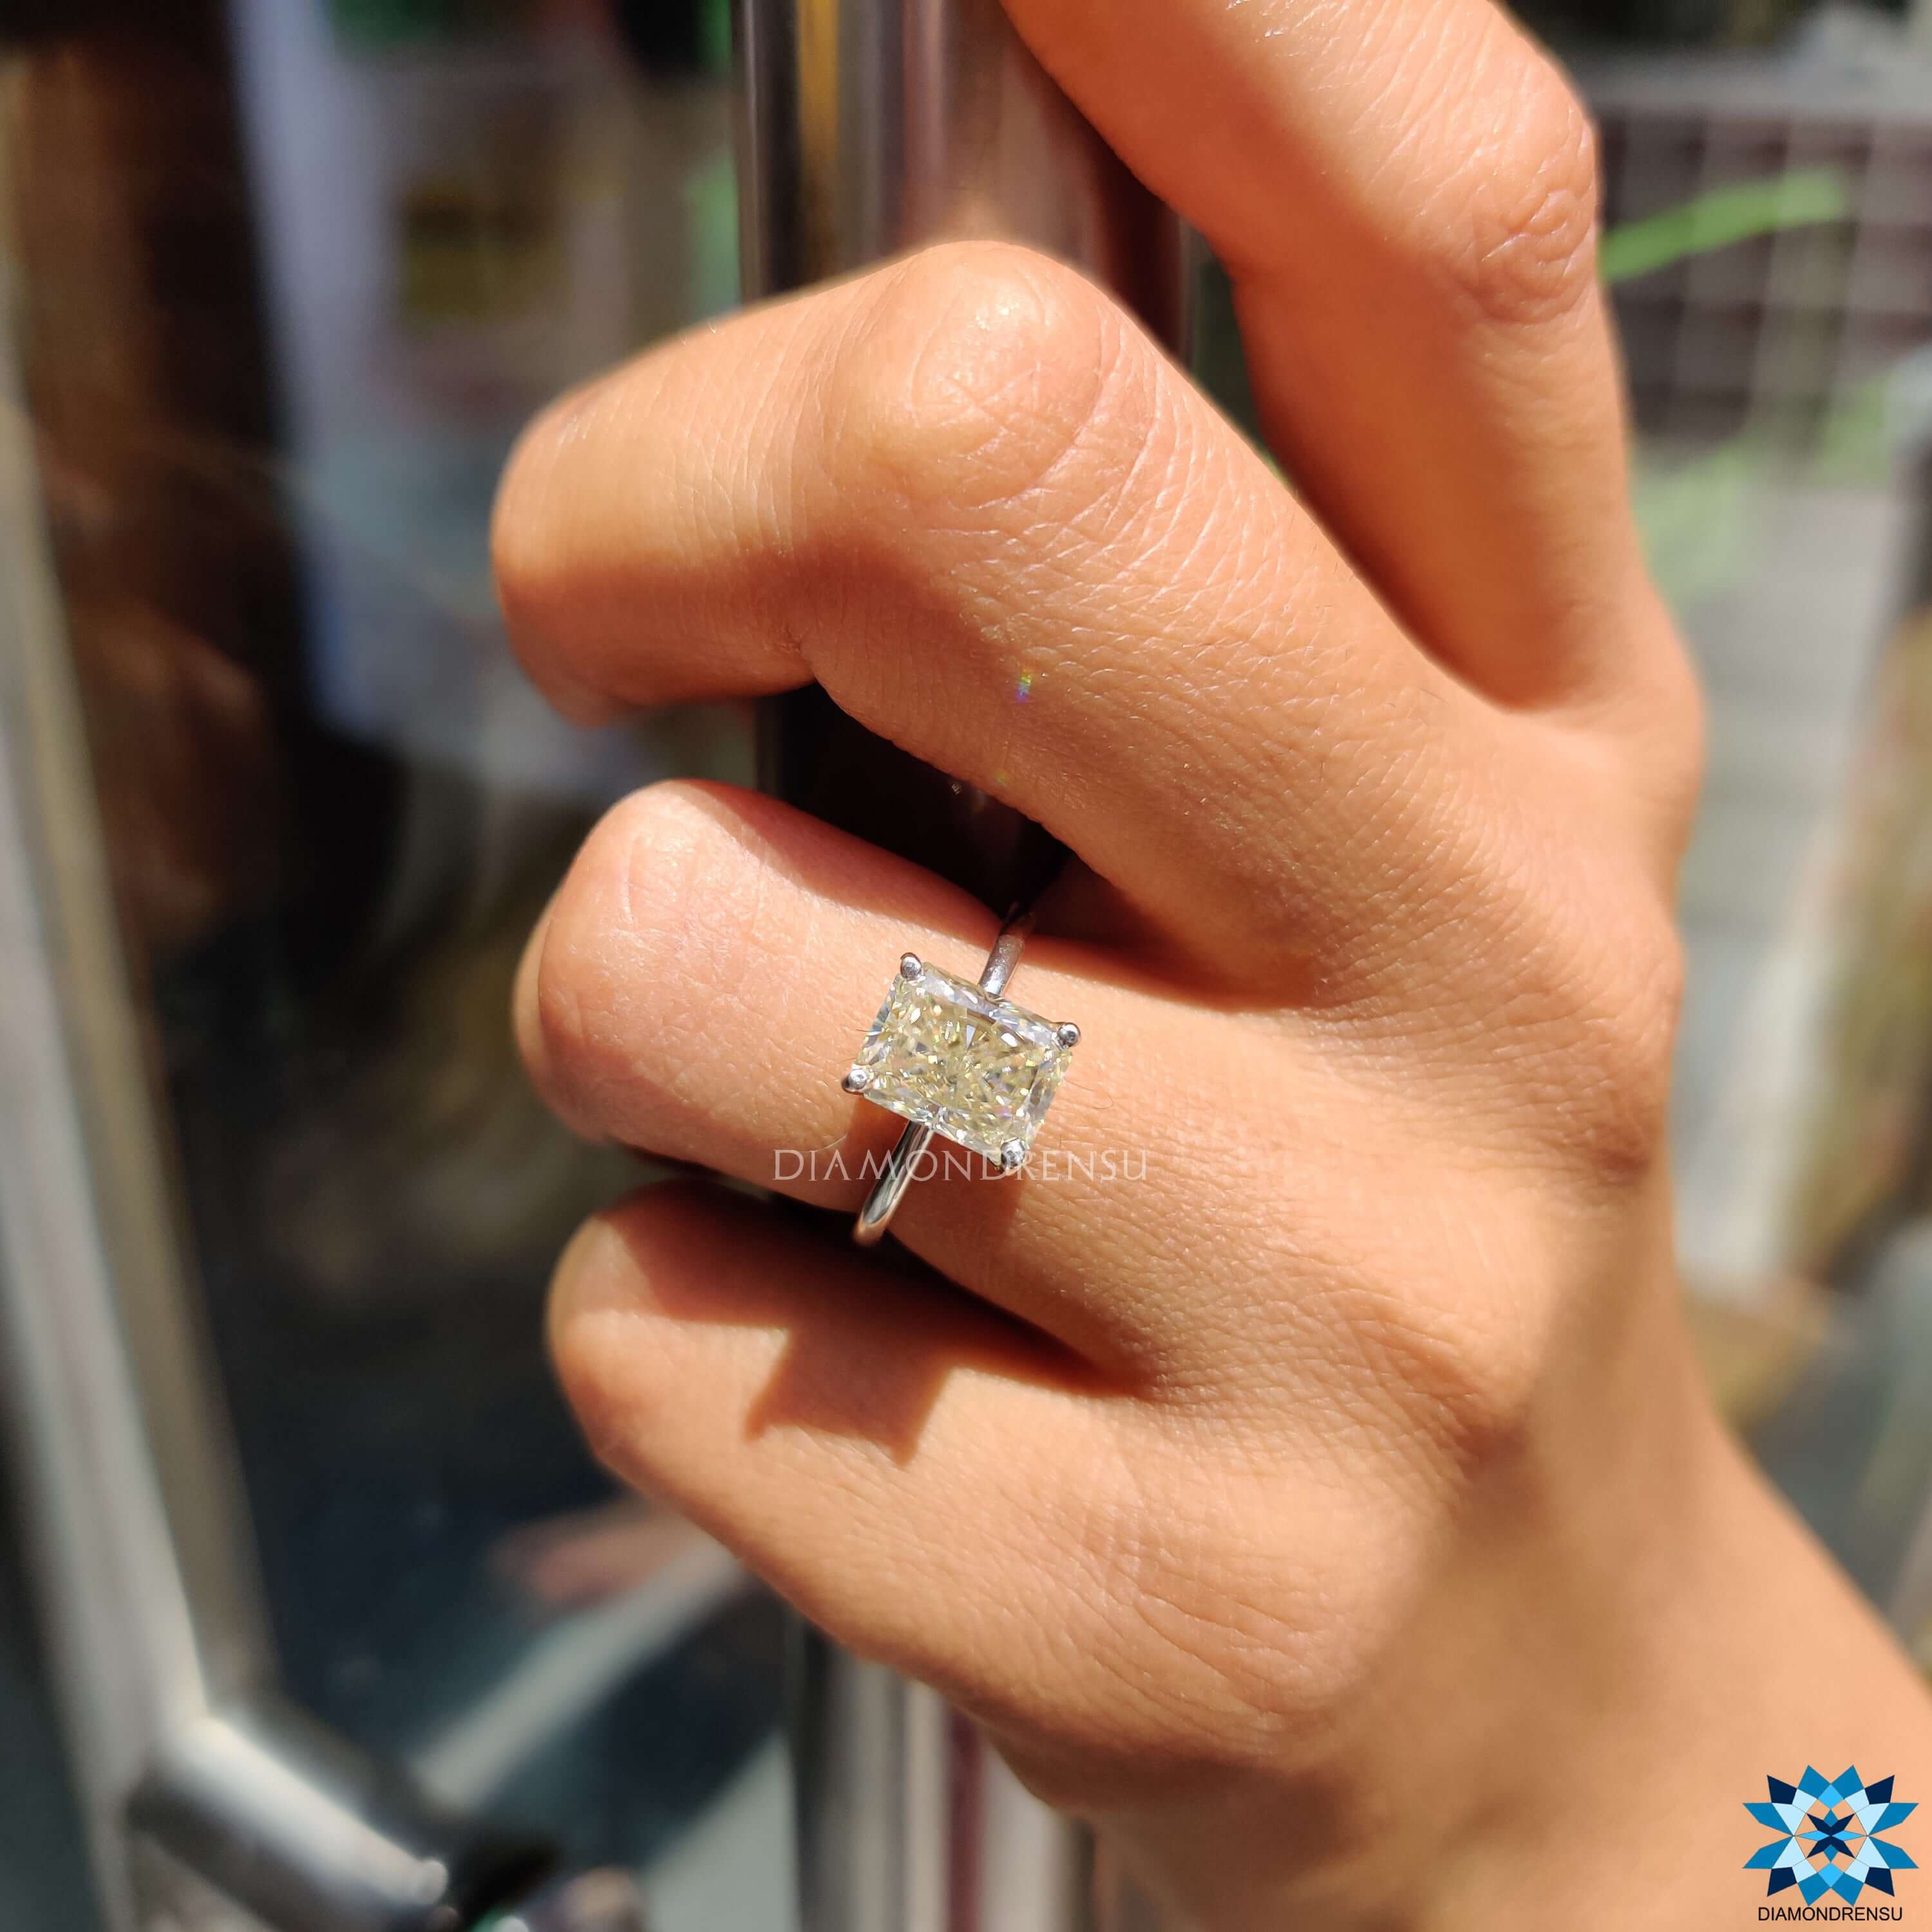 engagement ring design your own - diamondrensu